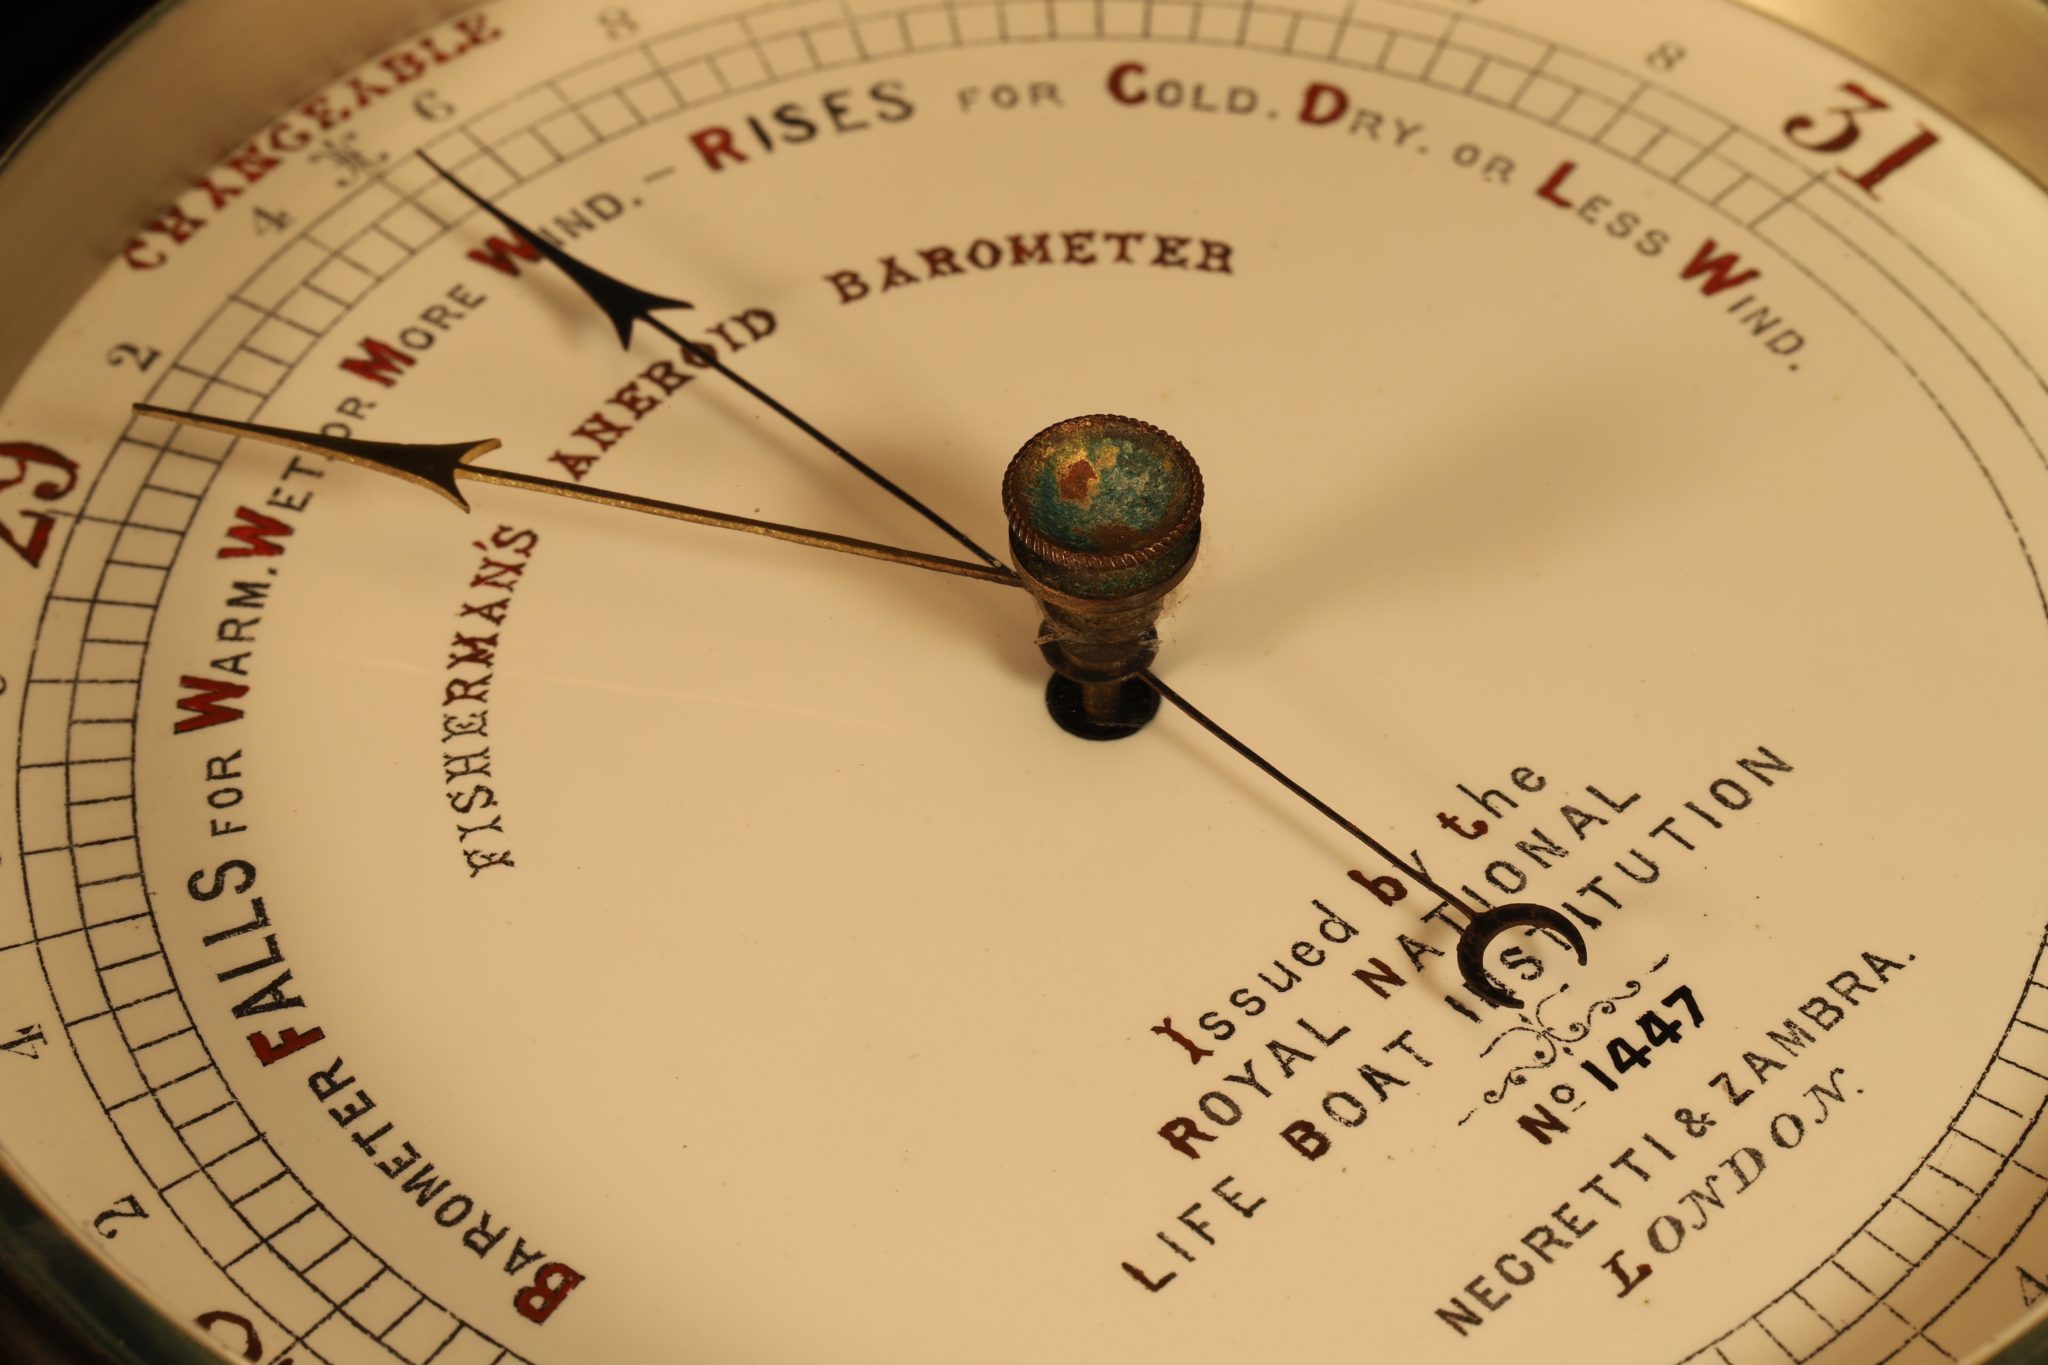 Image of Negretti & Zambra RNLI Barometer No 1447